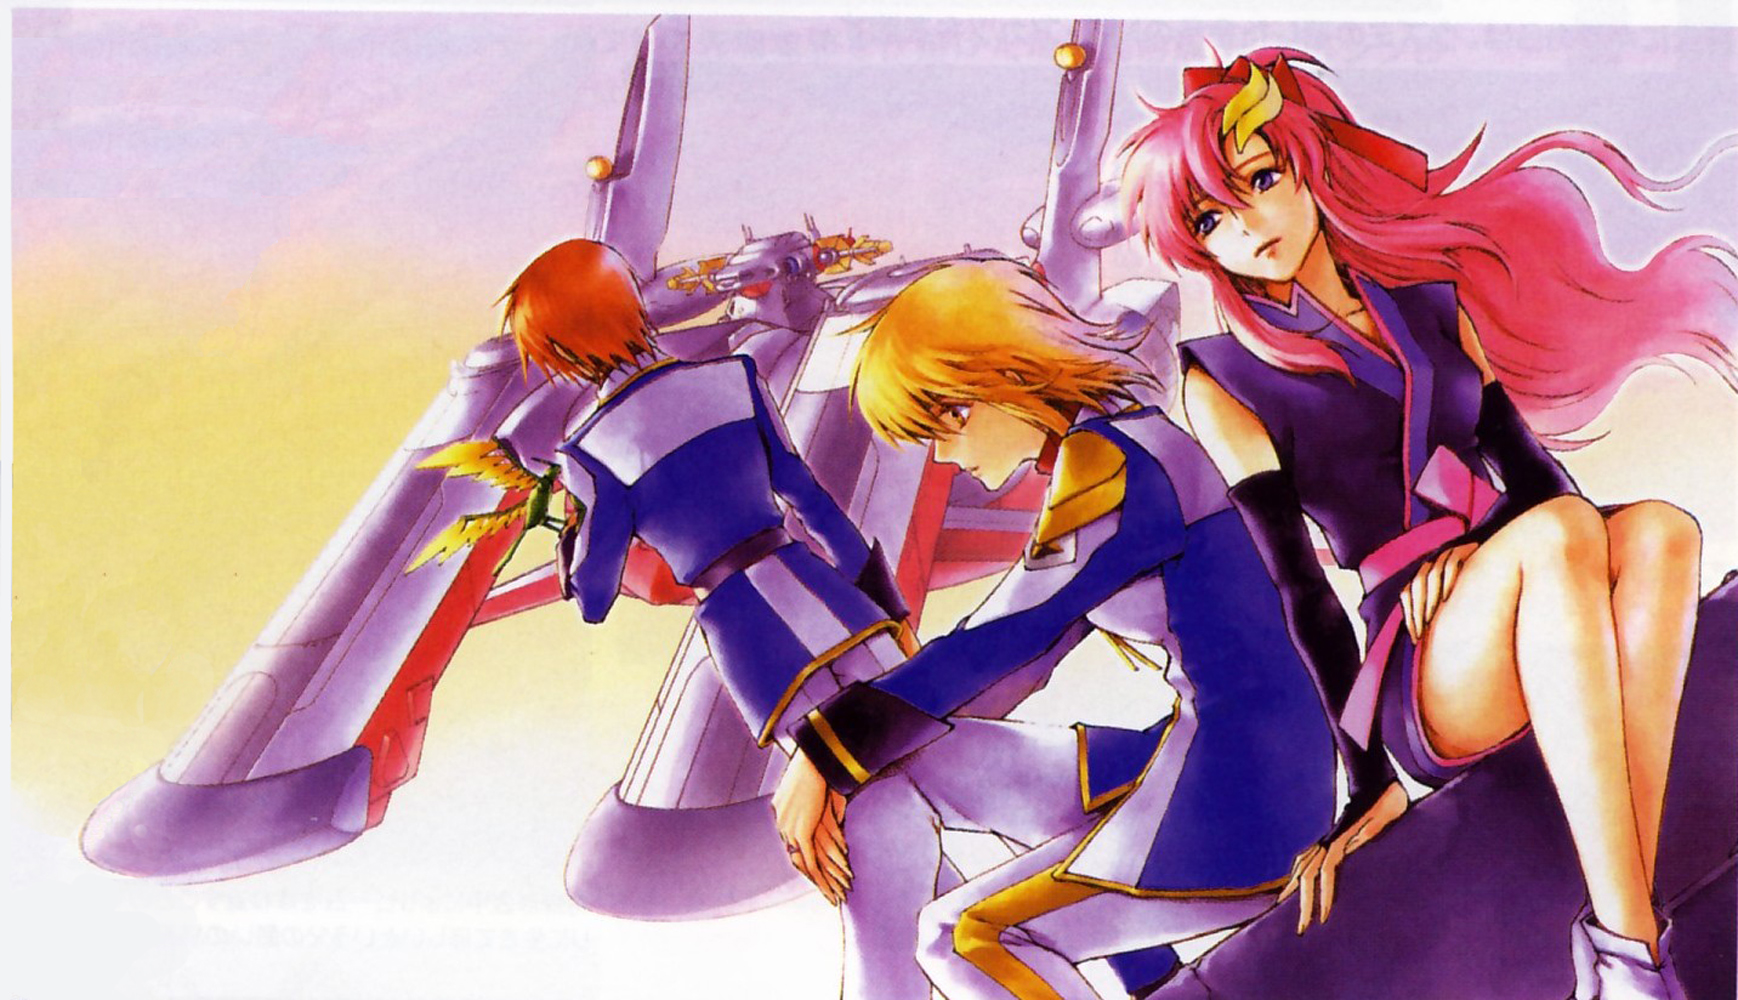 Anime Mobile Suit Gundam Seed Destiny HD Wallpaper Background Image.